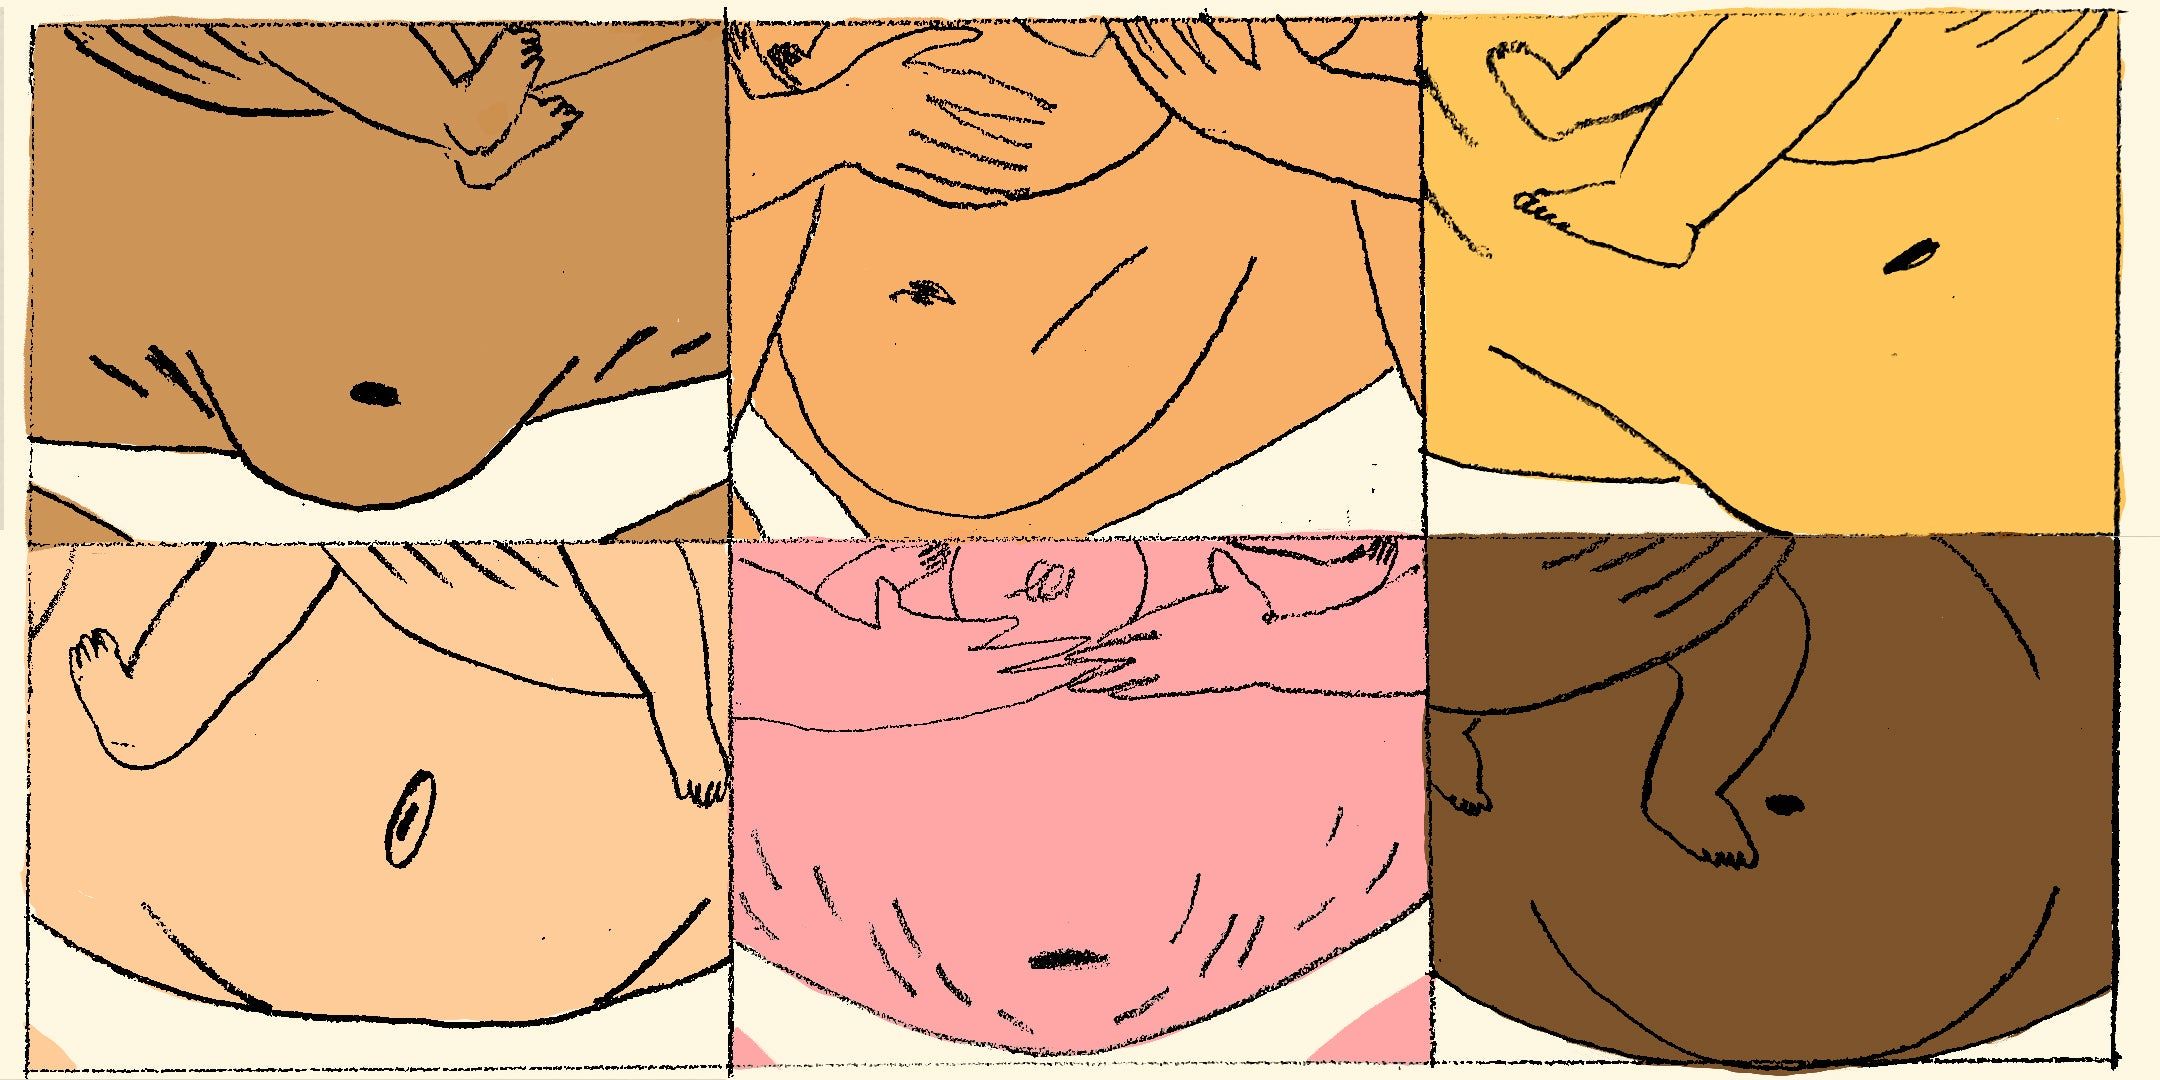 a series of postpartum bodies and newborn babies illustration